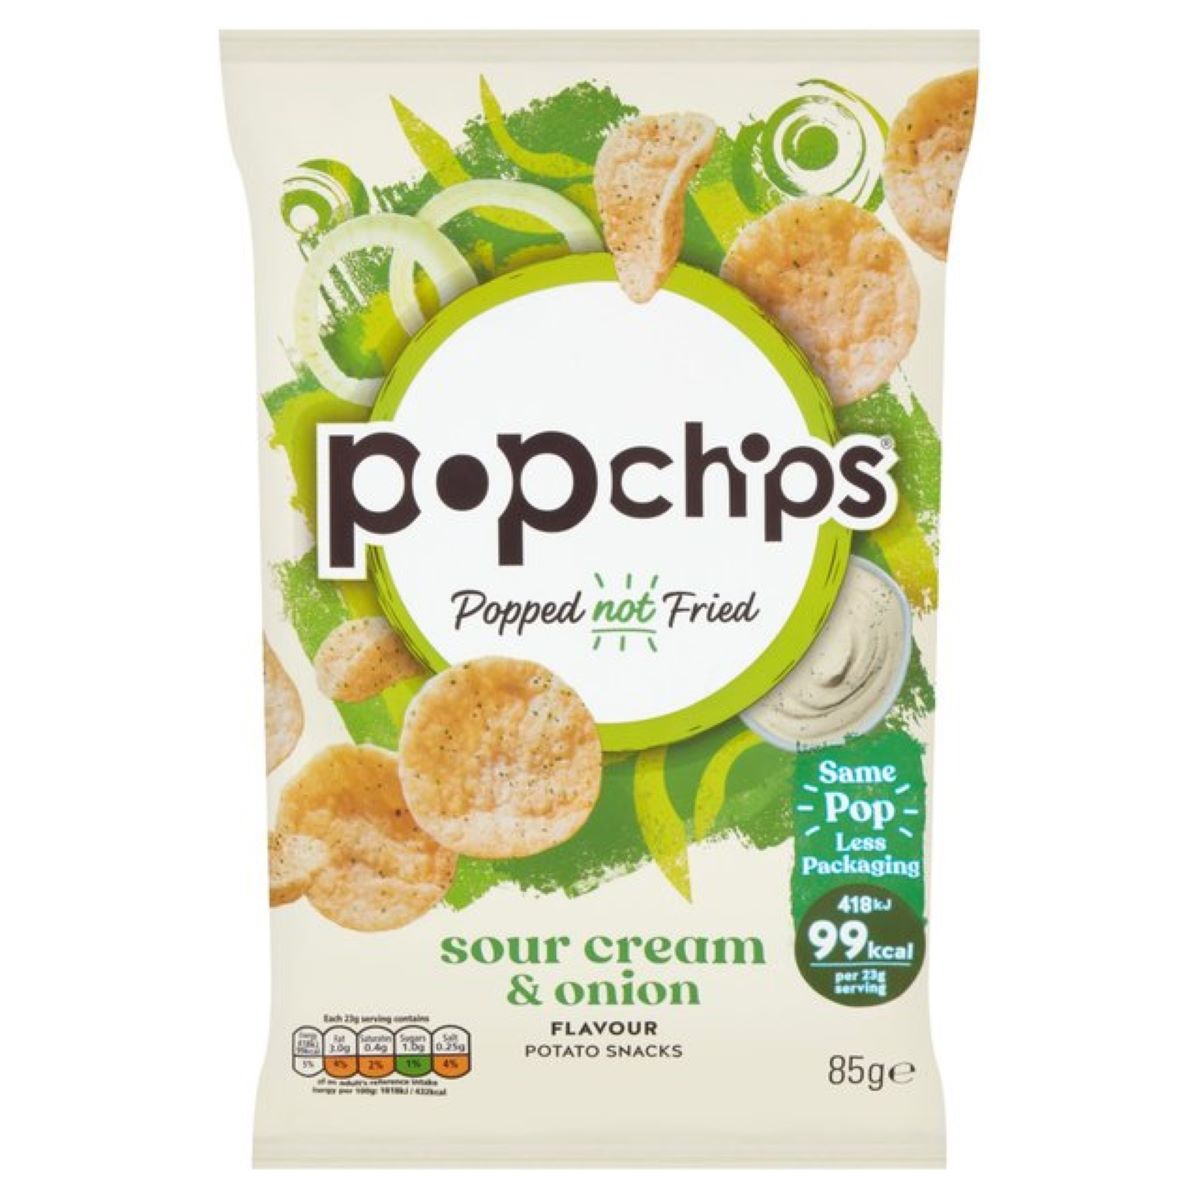 Popchips Sour Cream & Onion Sharing Crisps 85g